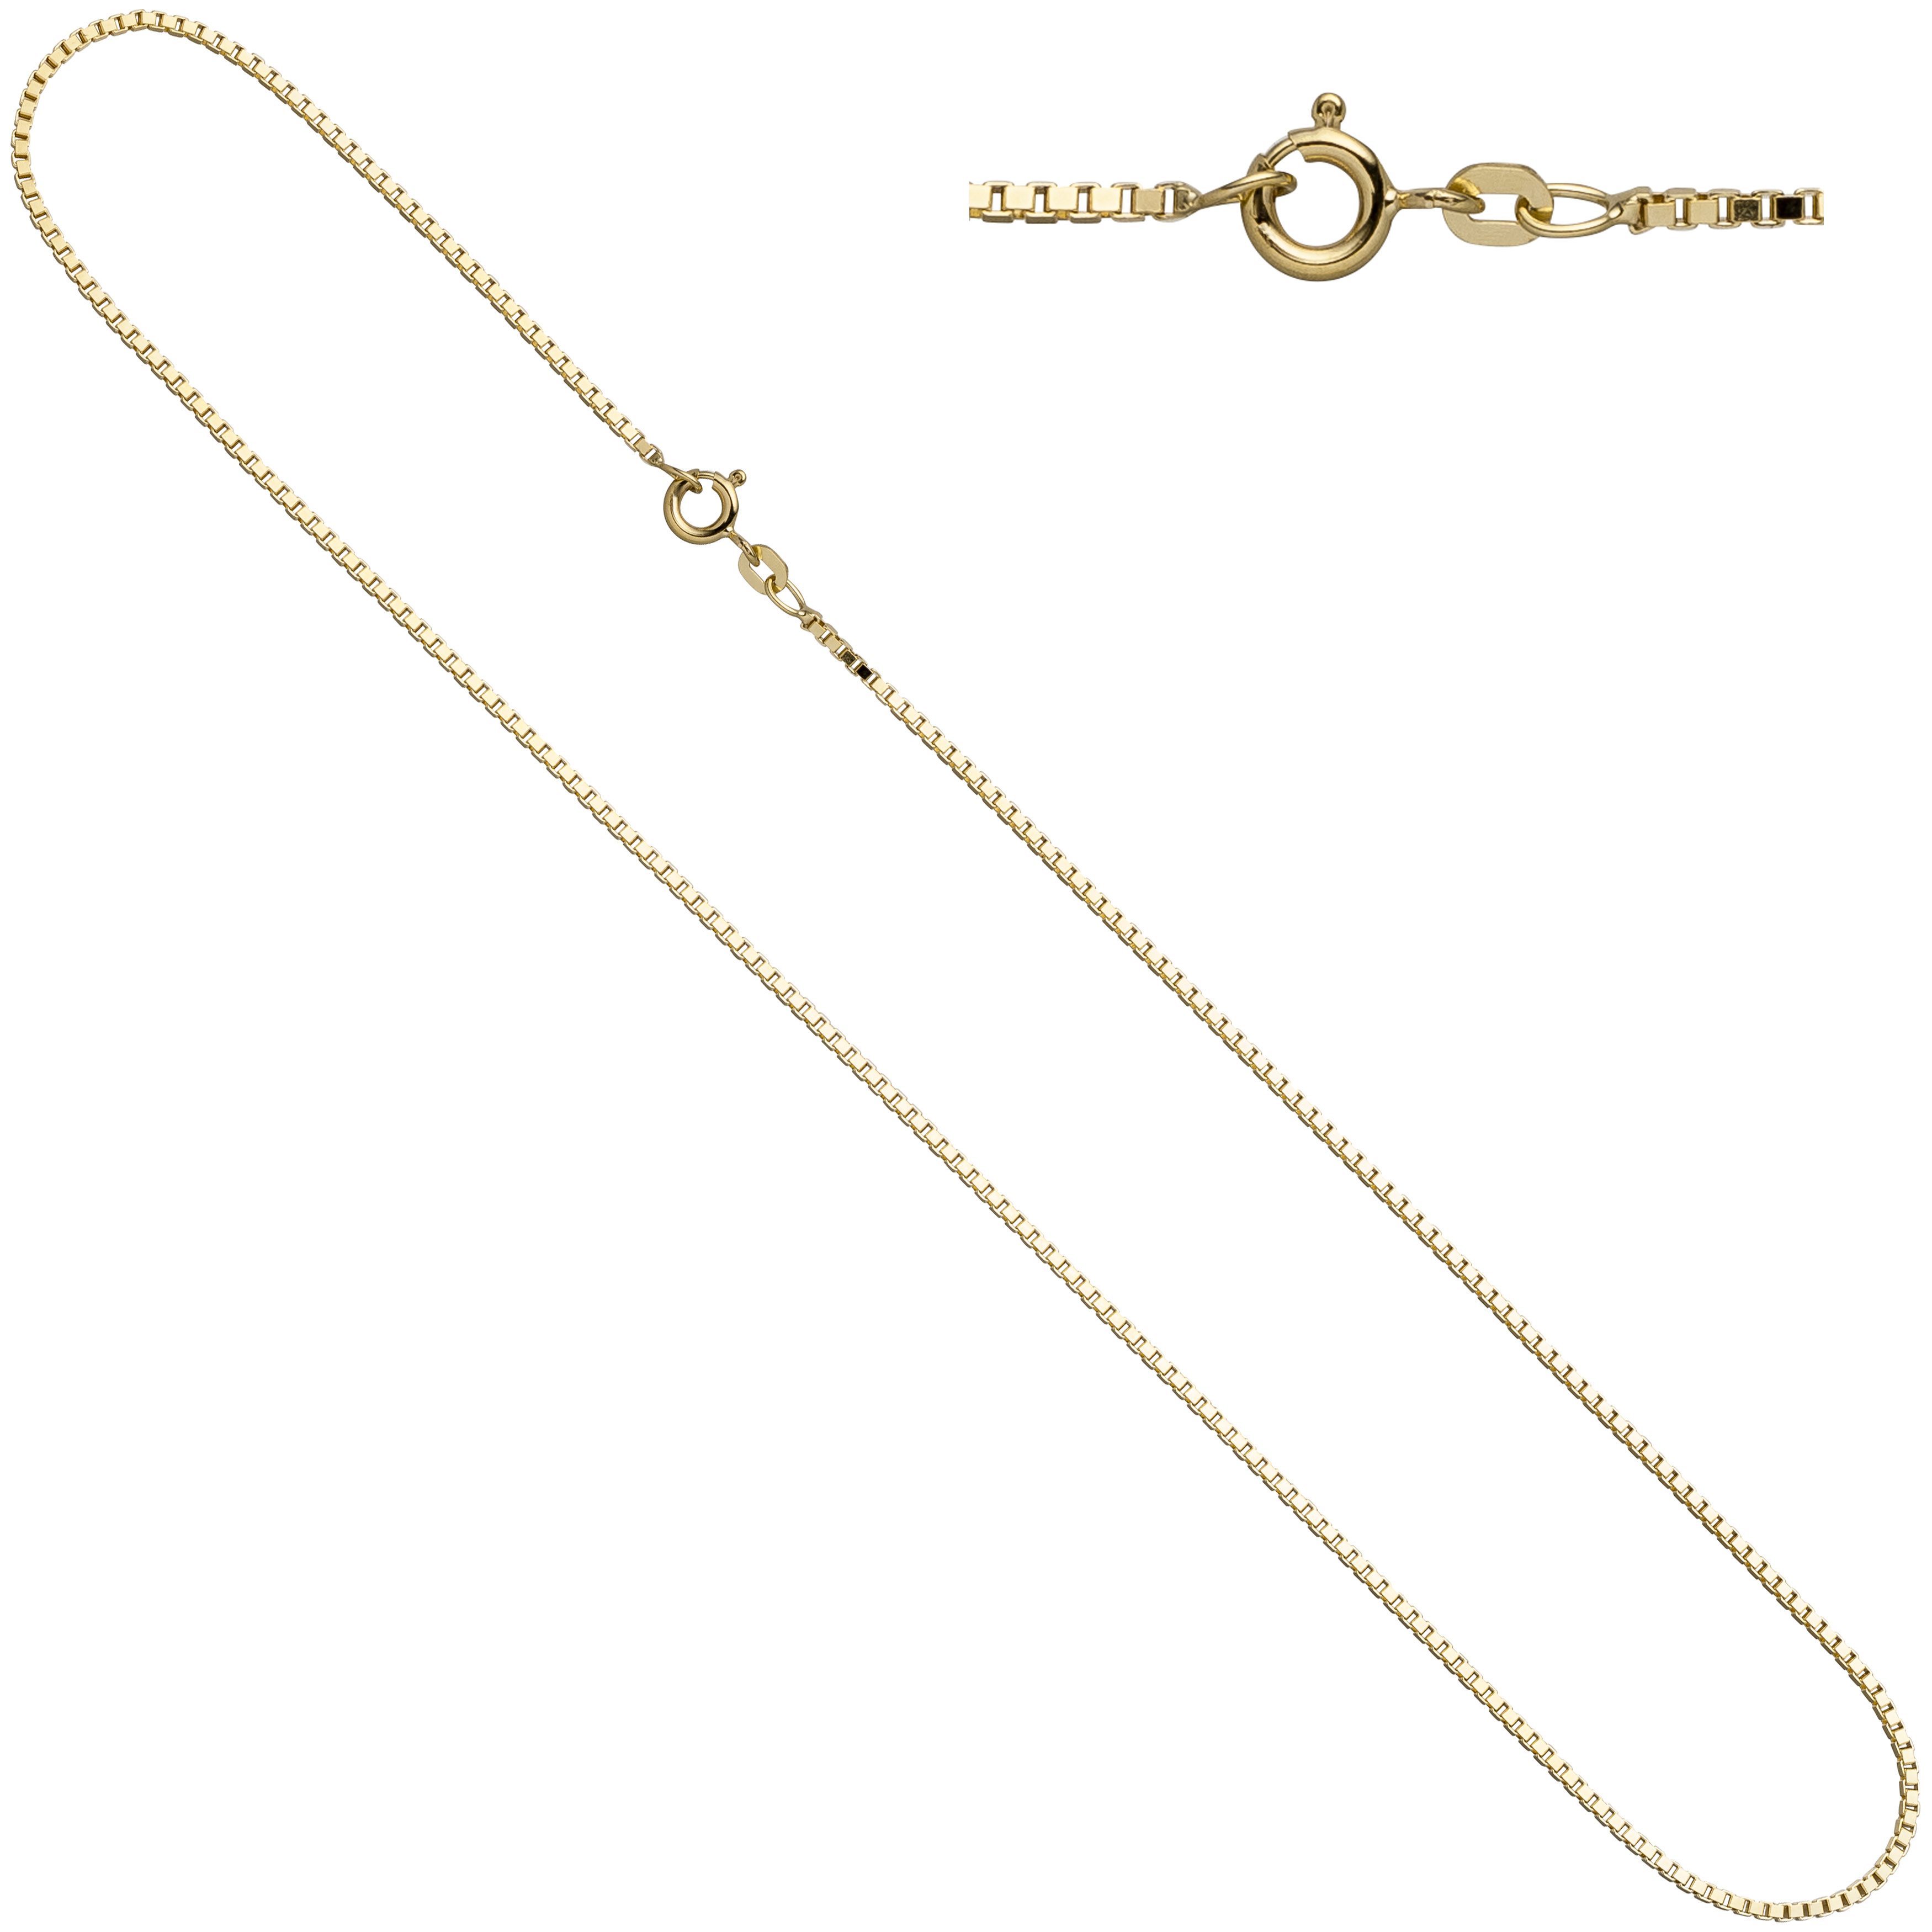 Venezianerkette 333 Gelbgold 1,0 mm 42 cm Gold Kette Halskette Federring